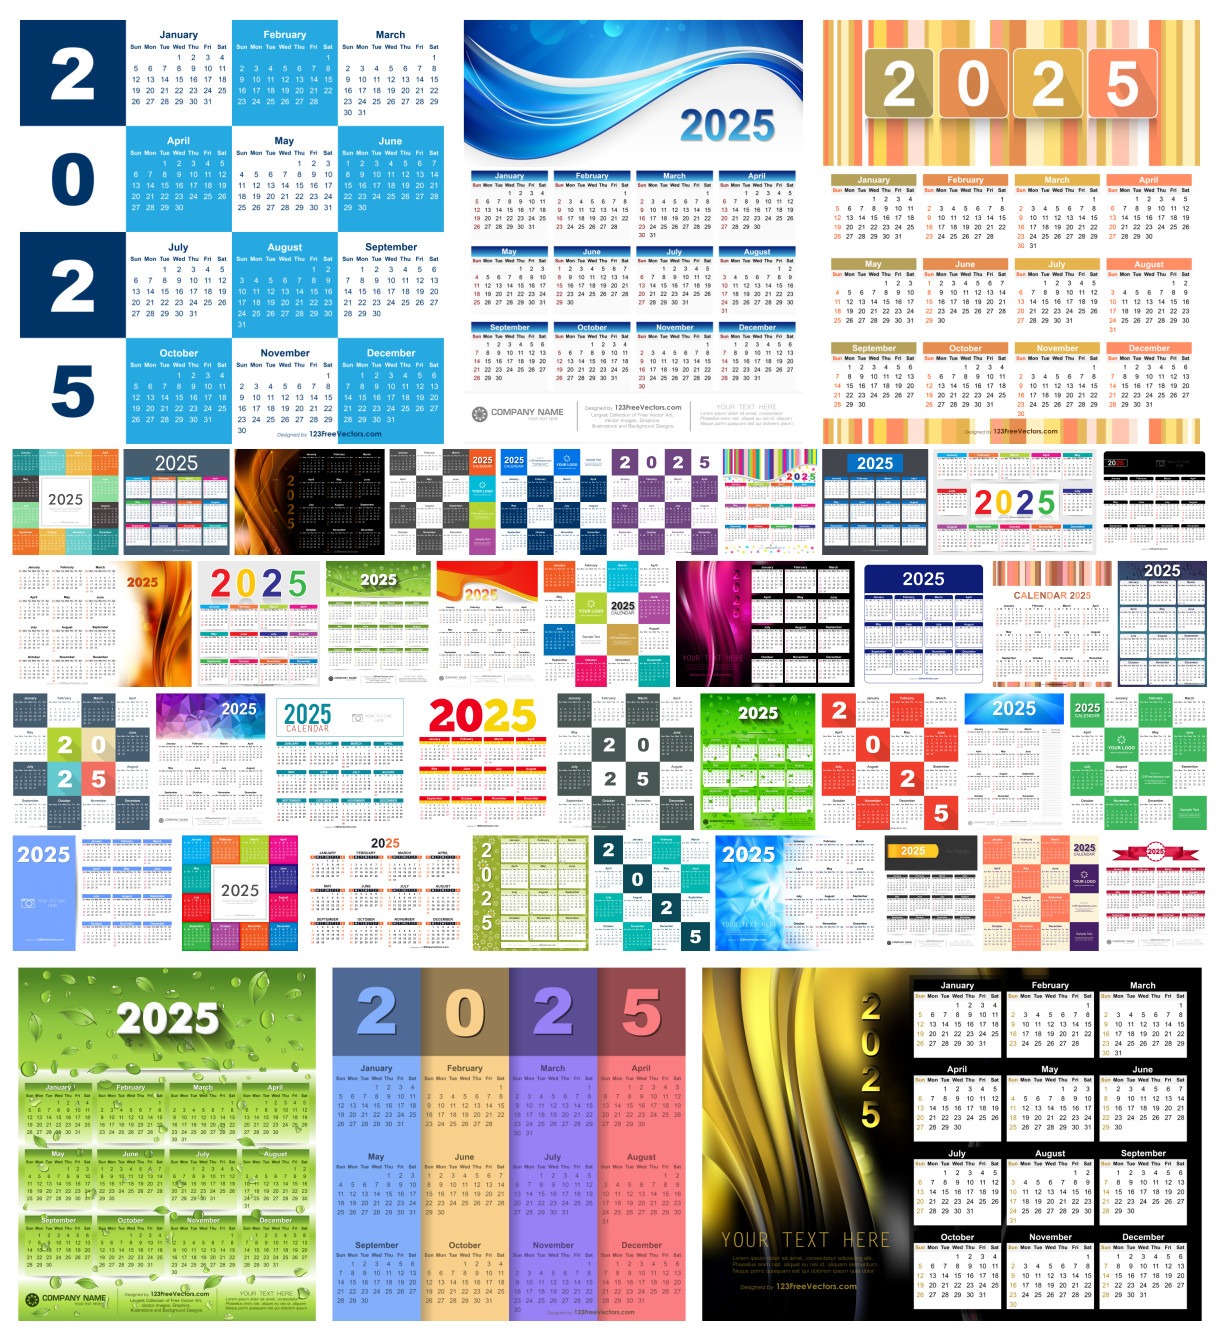 Free Download: 55 Colorful 2025 Calendar Designs in Vector & PDF Formats